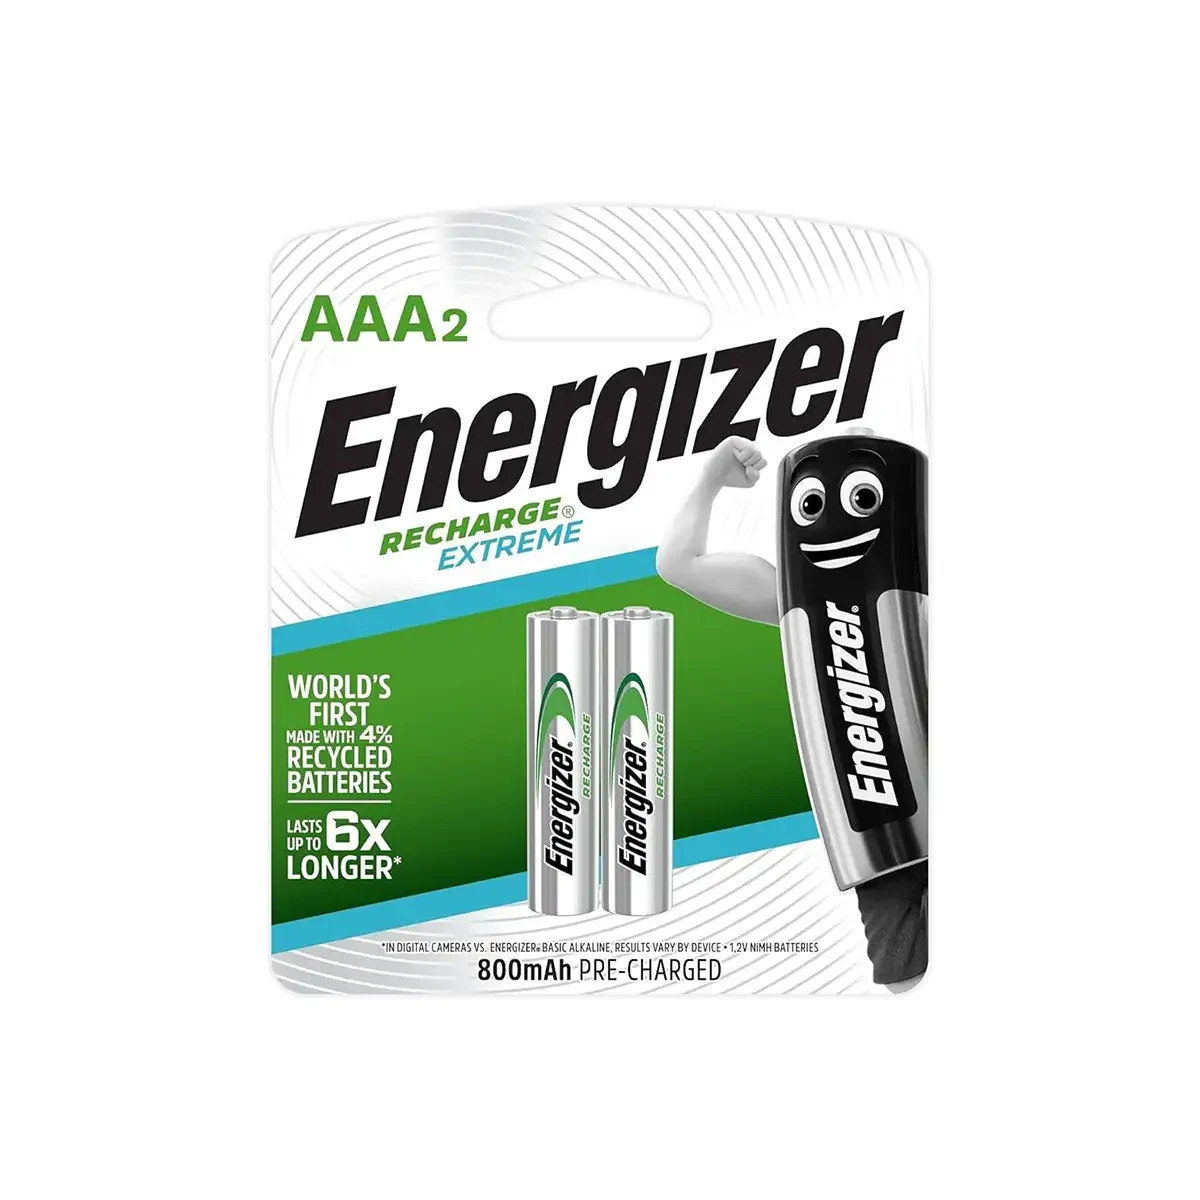 Energizer 2 AAA Rechargeable Blister Card - 2 حجر شحن ريموت